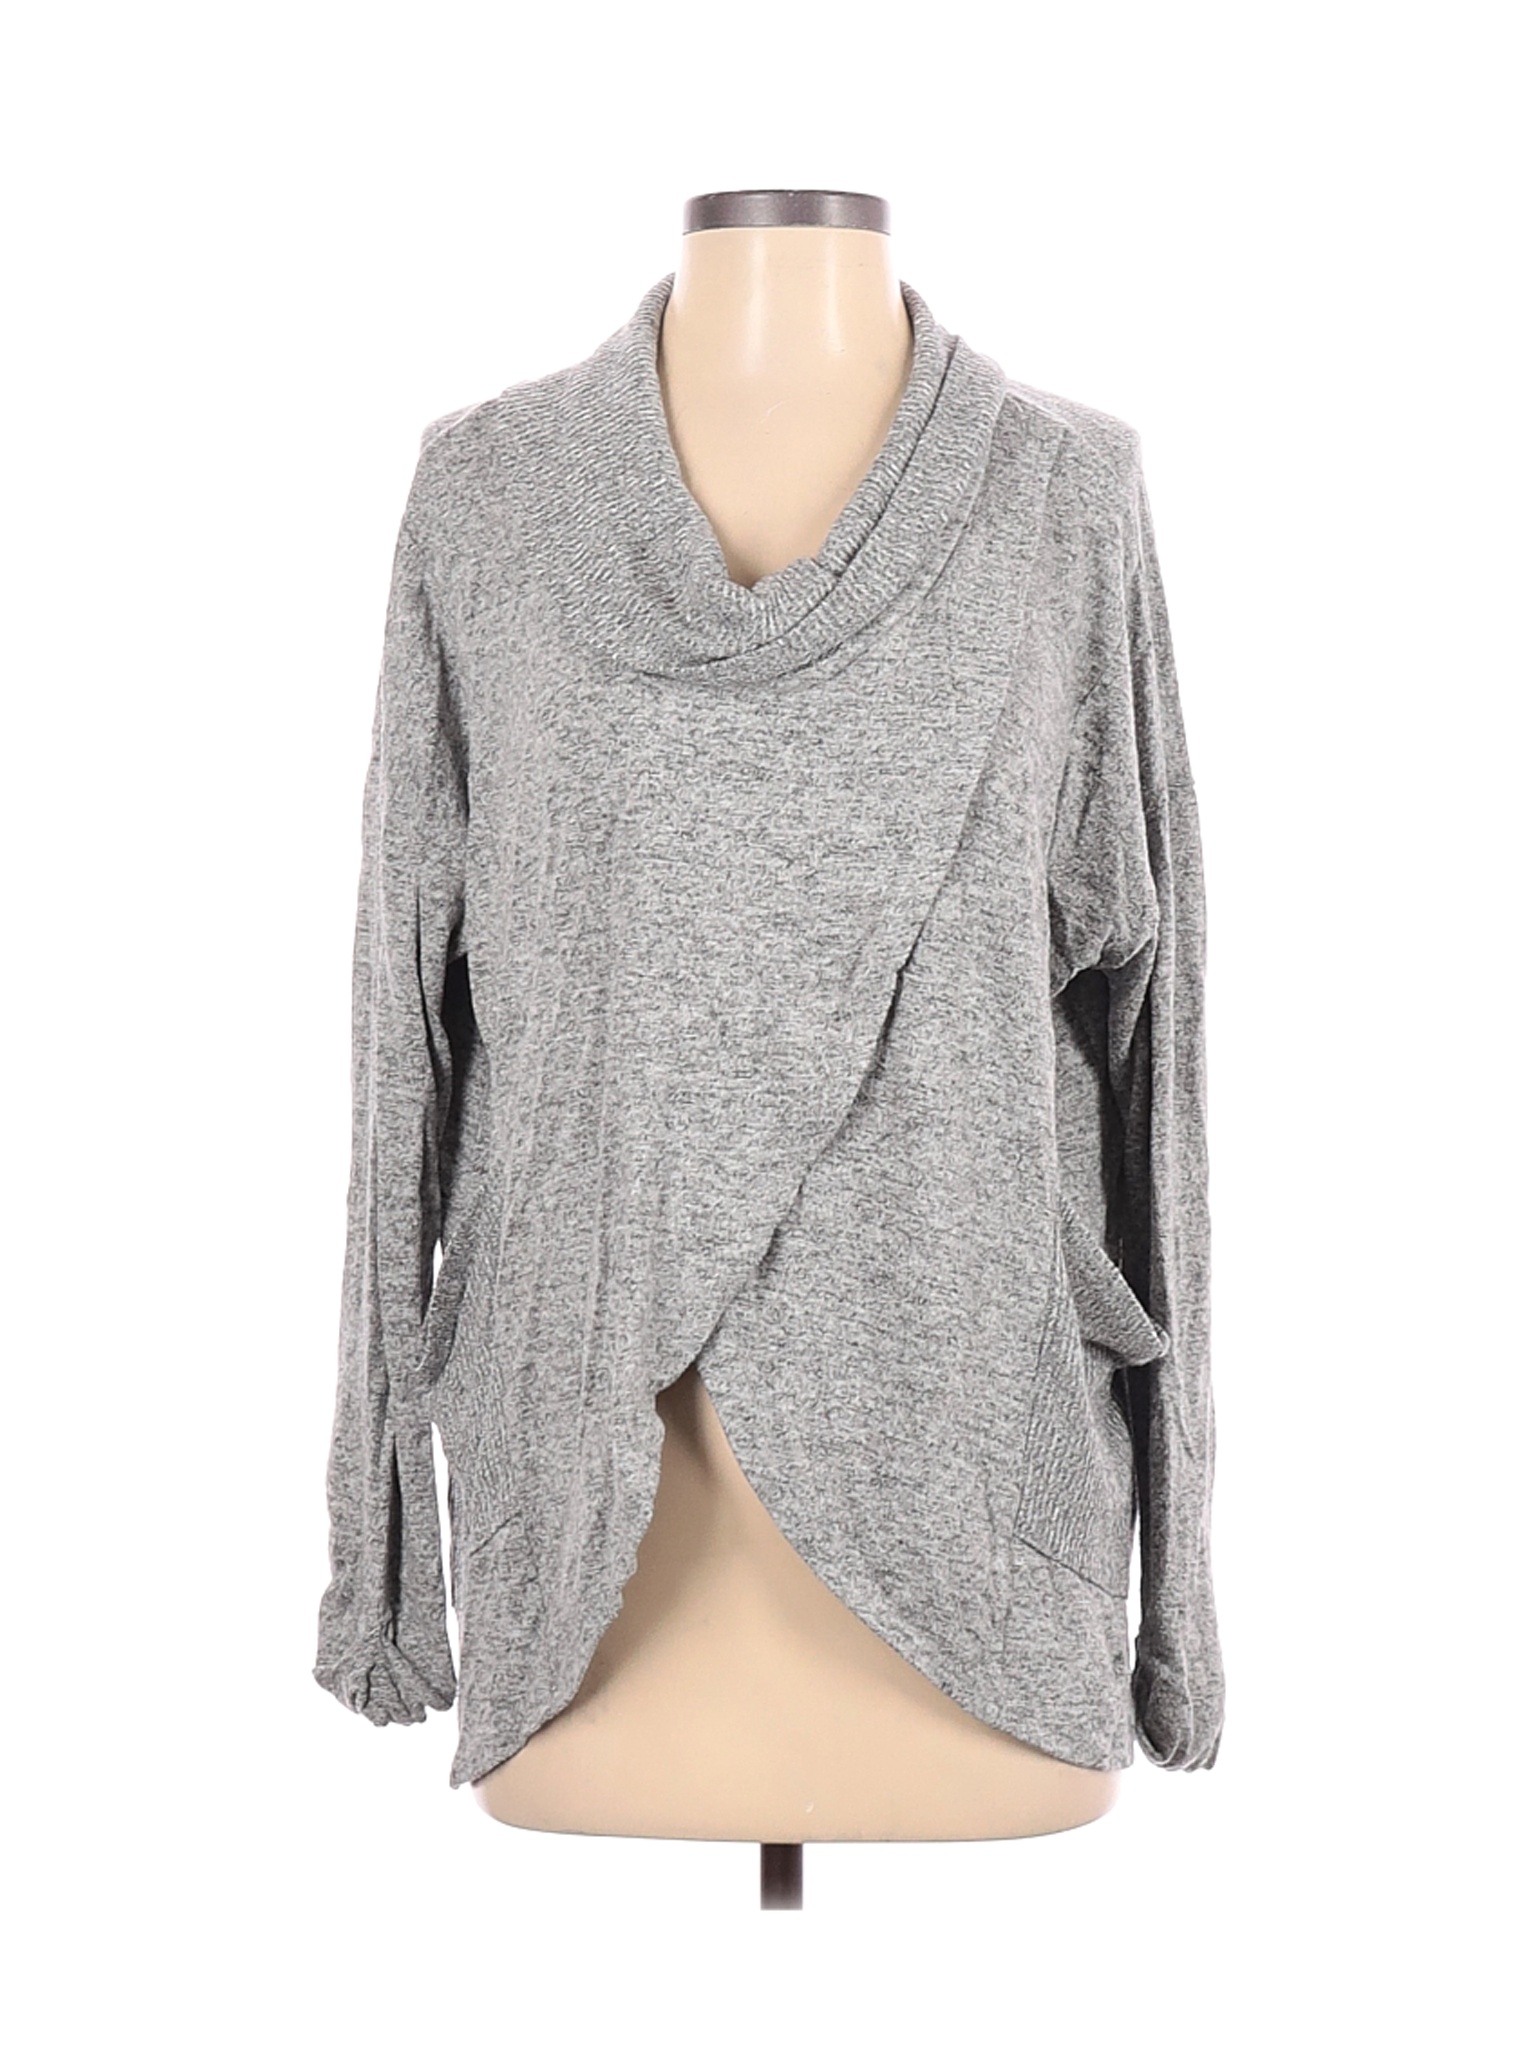 Alexander + David Women Gray Pullover Sweater S | eBay